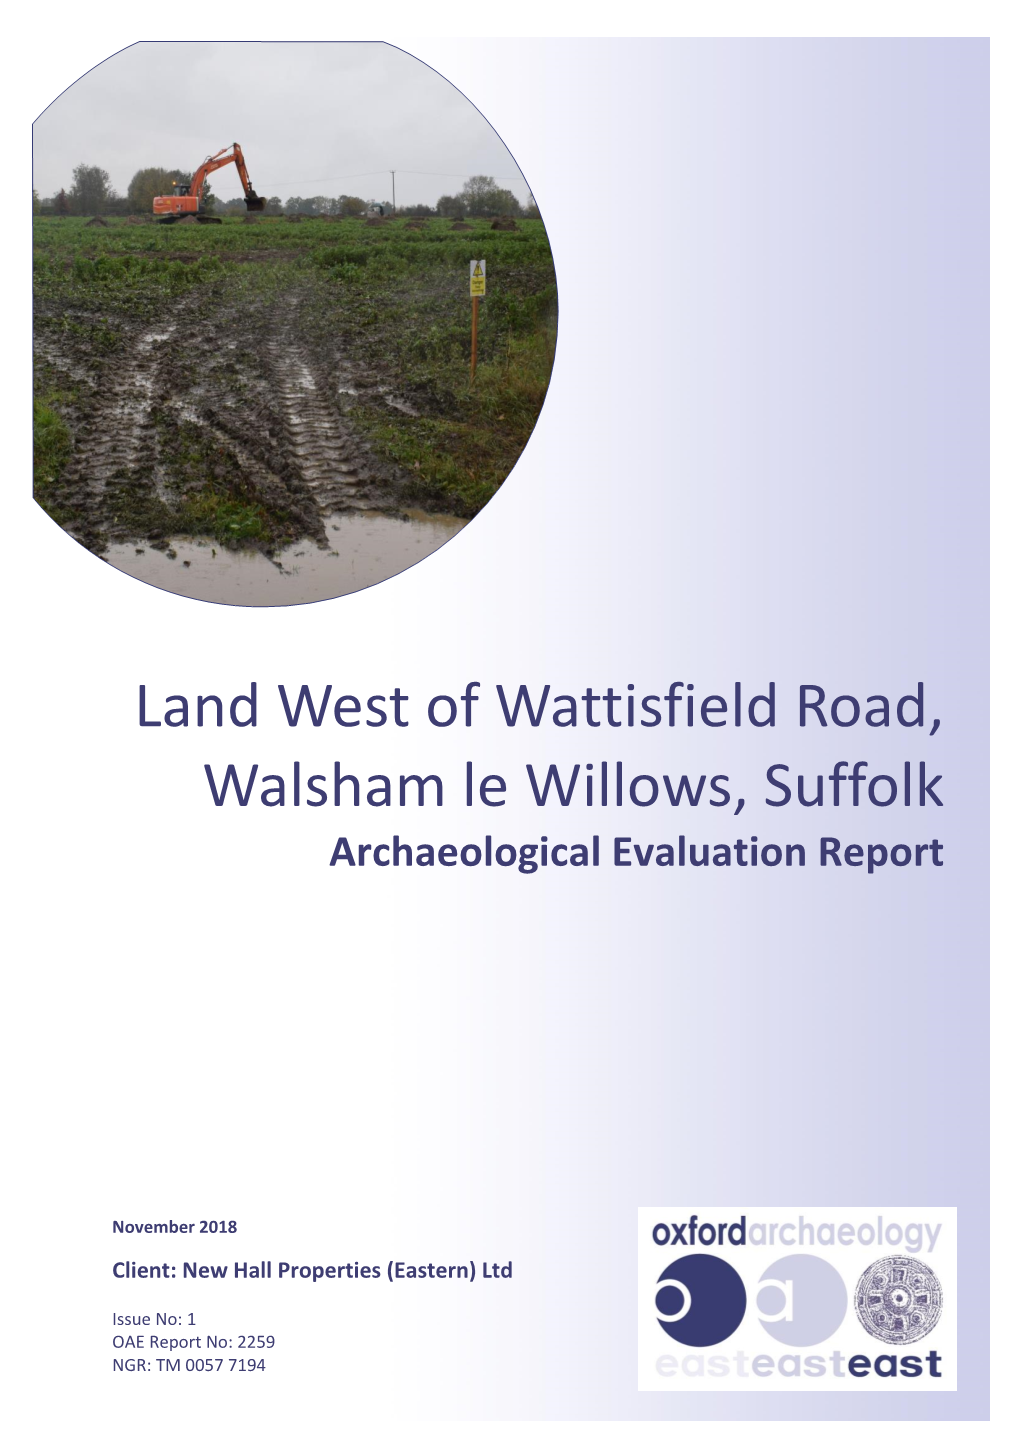 Land West of Wattisfield Road, Walsham Le Willows, Suffolk Version 1